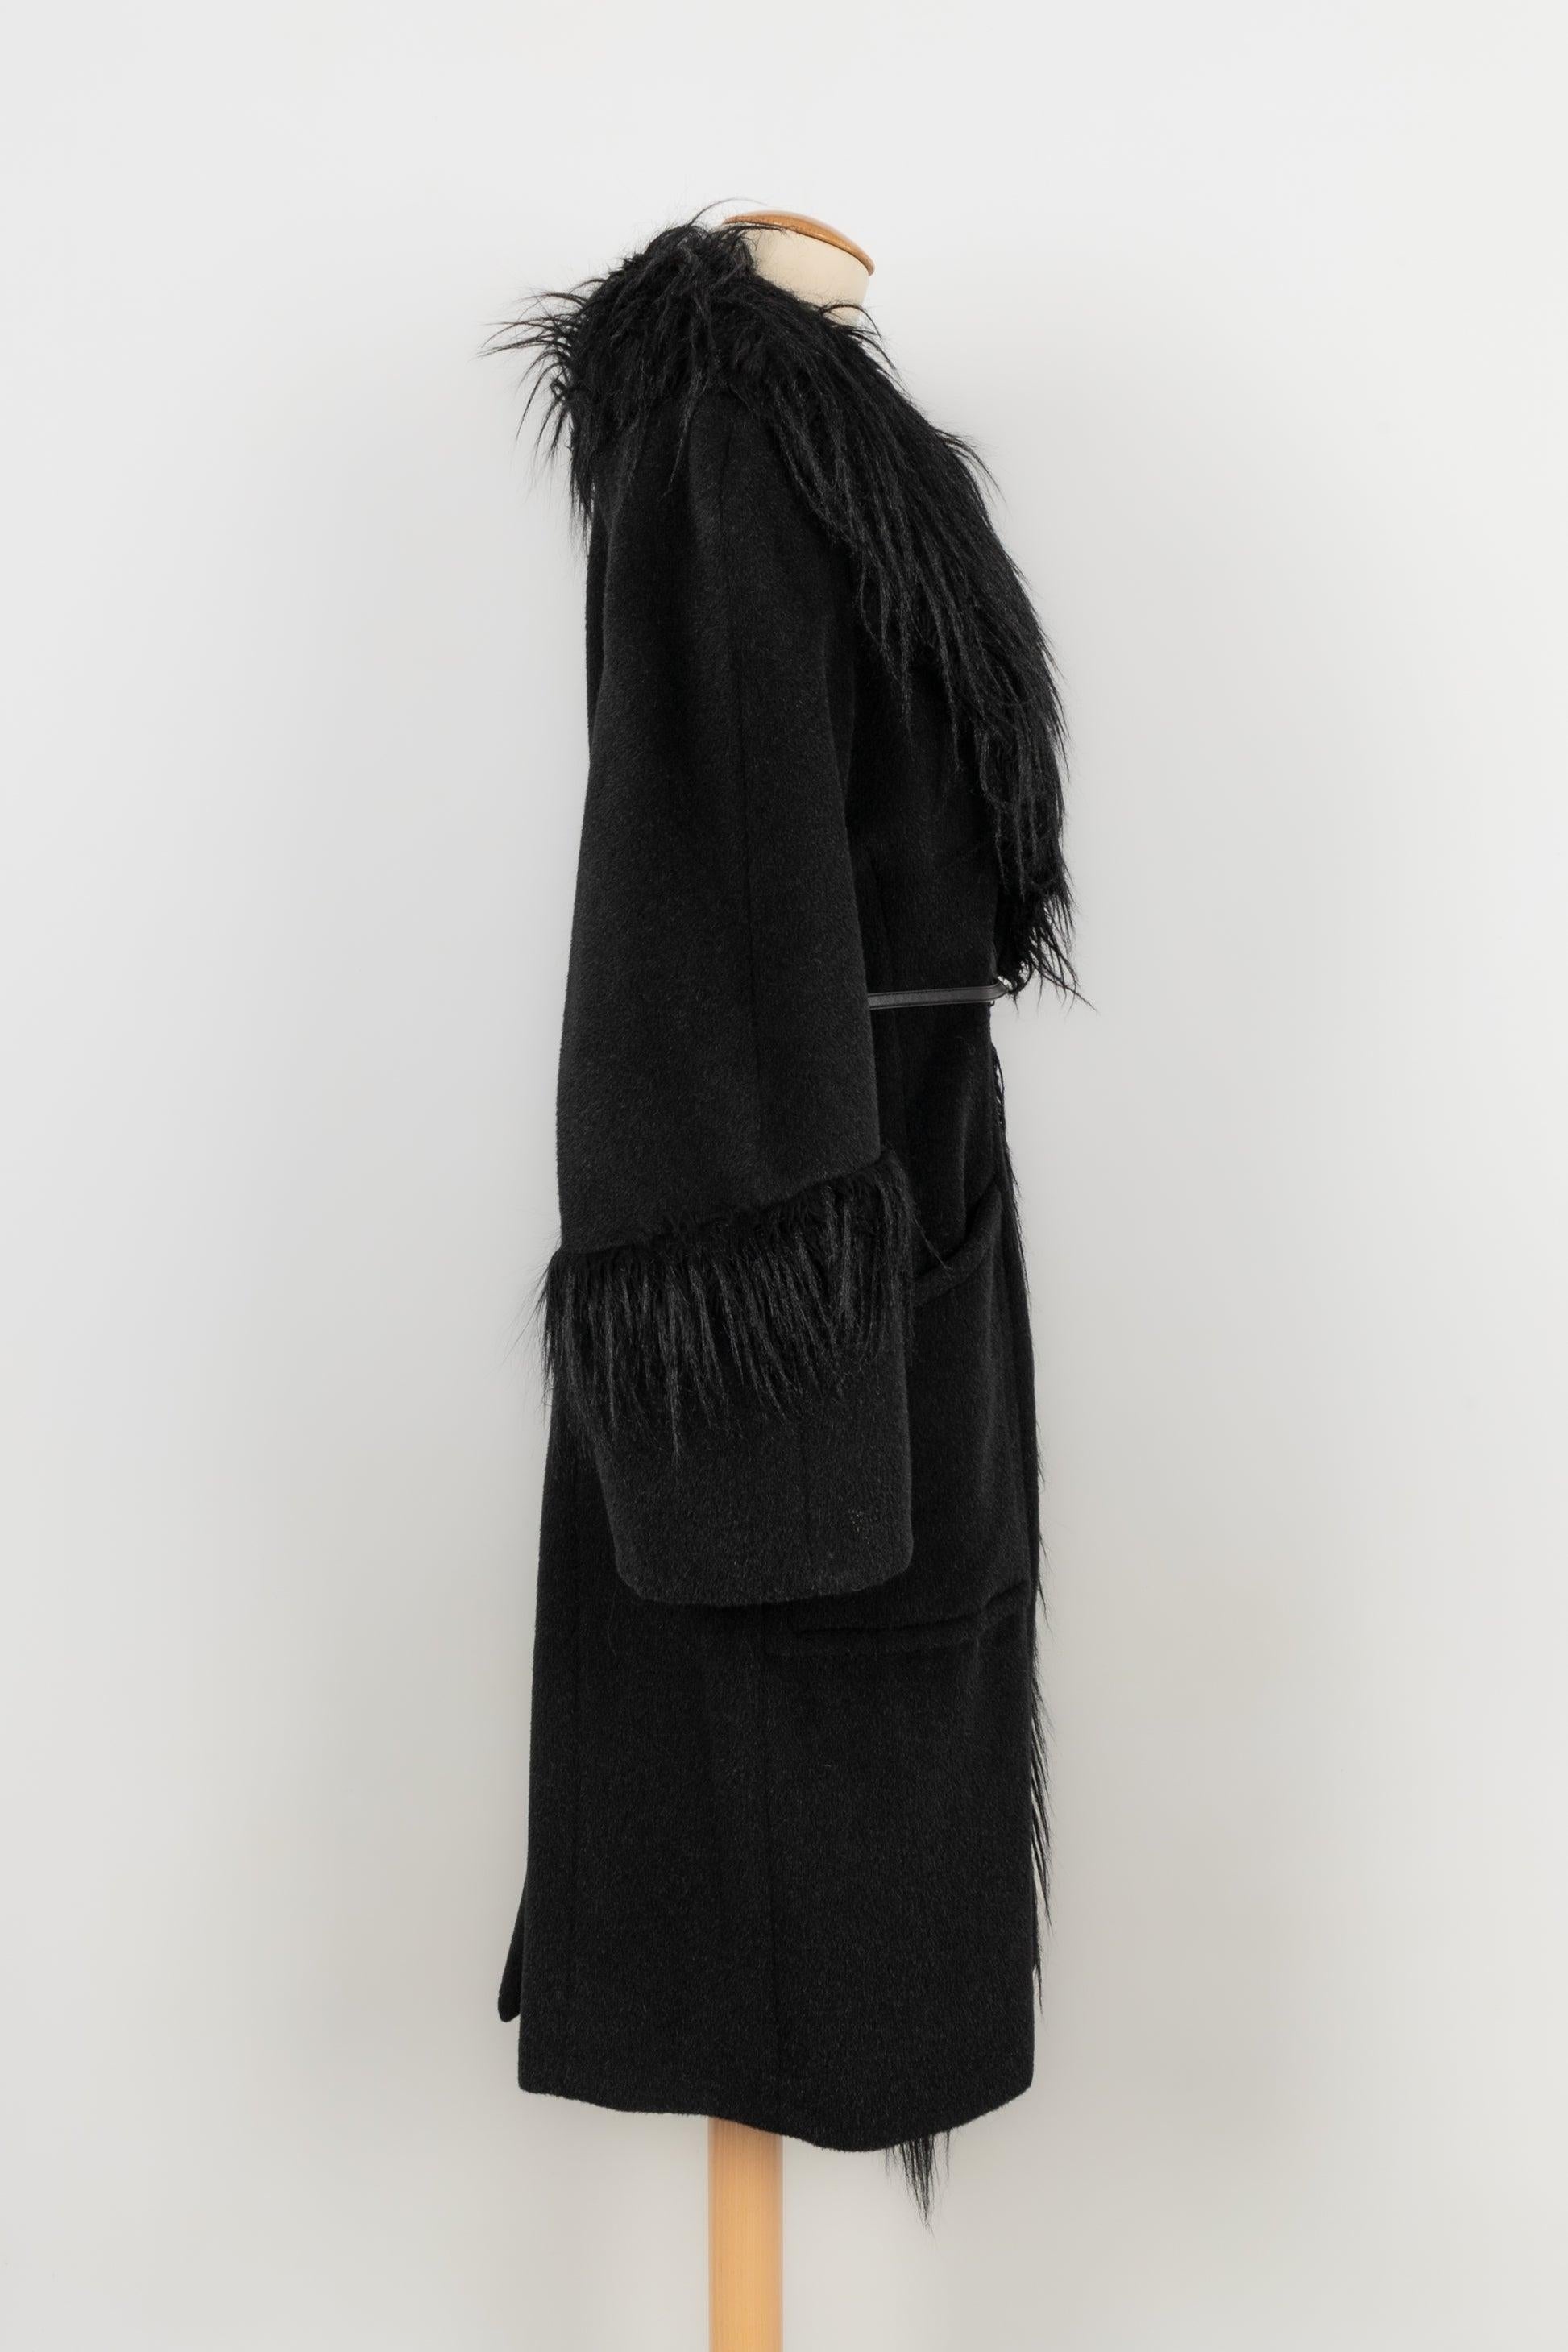 Mugler Black Coat Edged with Faux Fur 40FR, 2000s For Sale 1